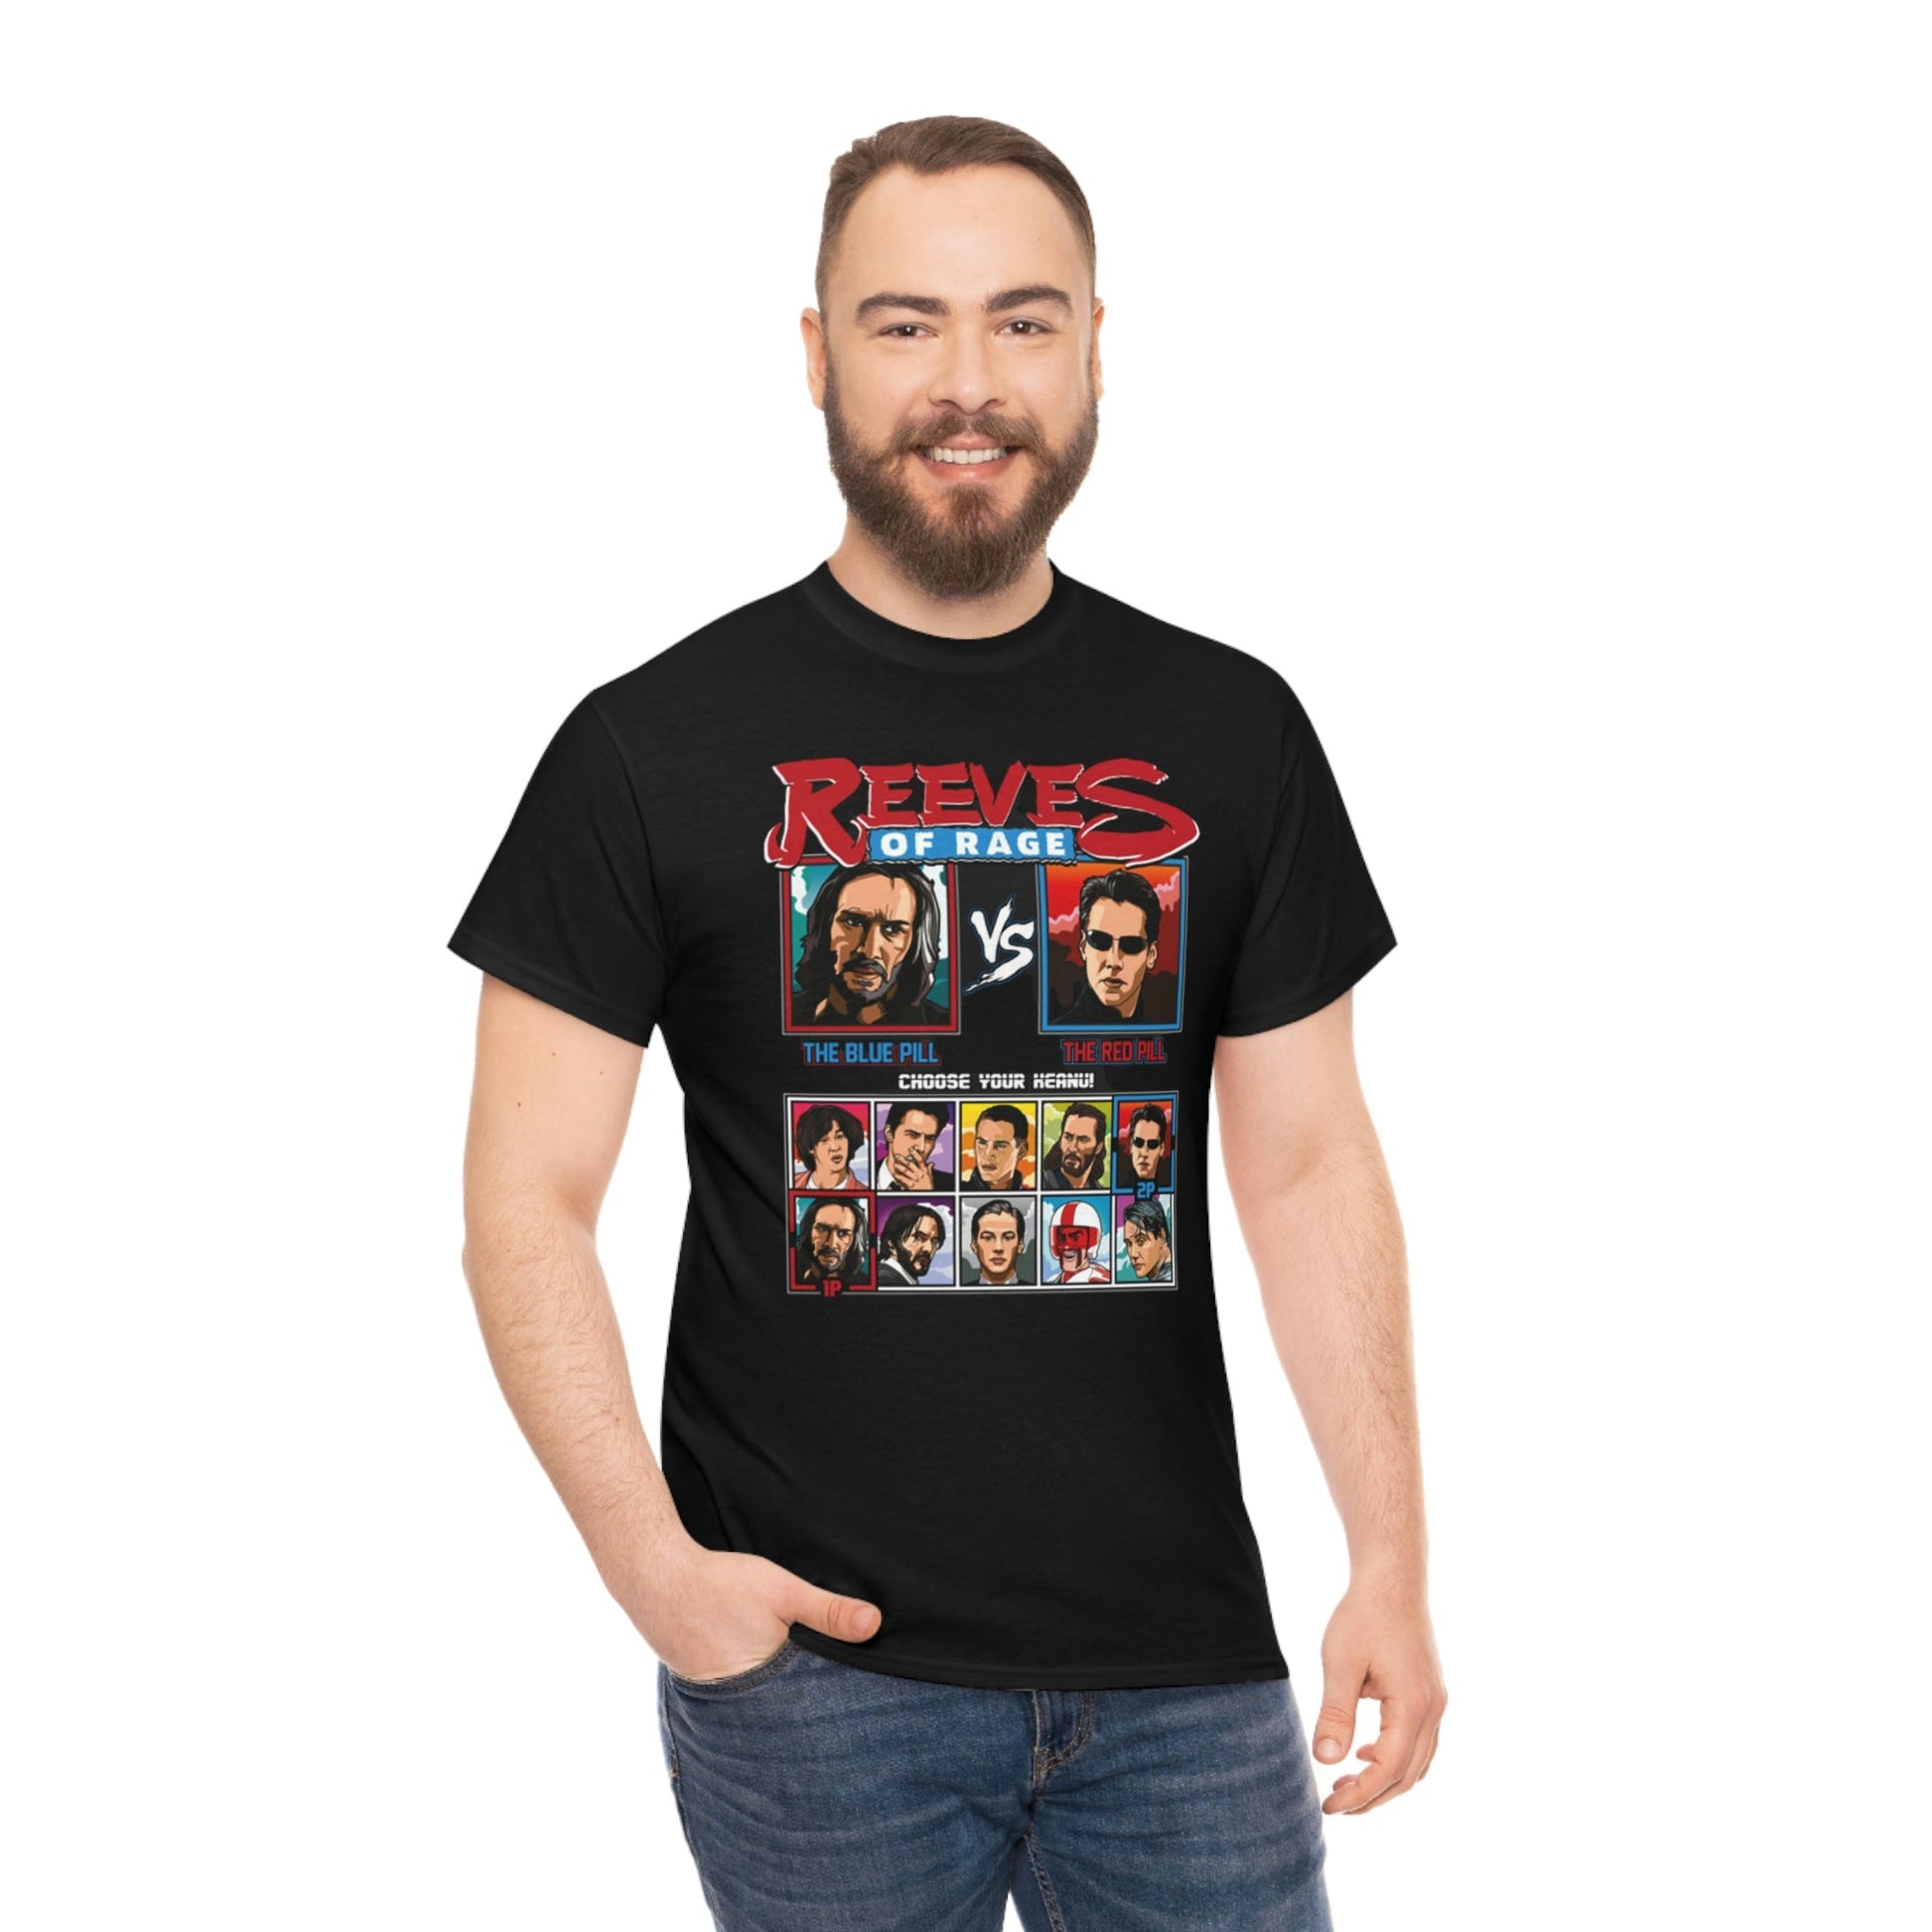 Keanu Reeves of Rage T-Shirt - RetroTeeShop